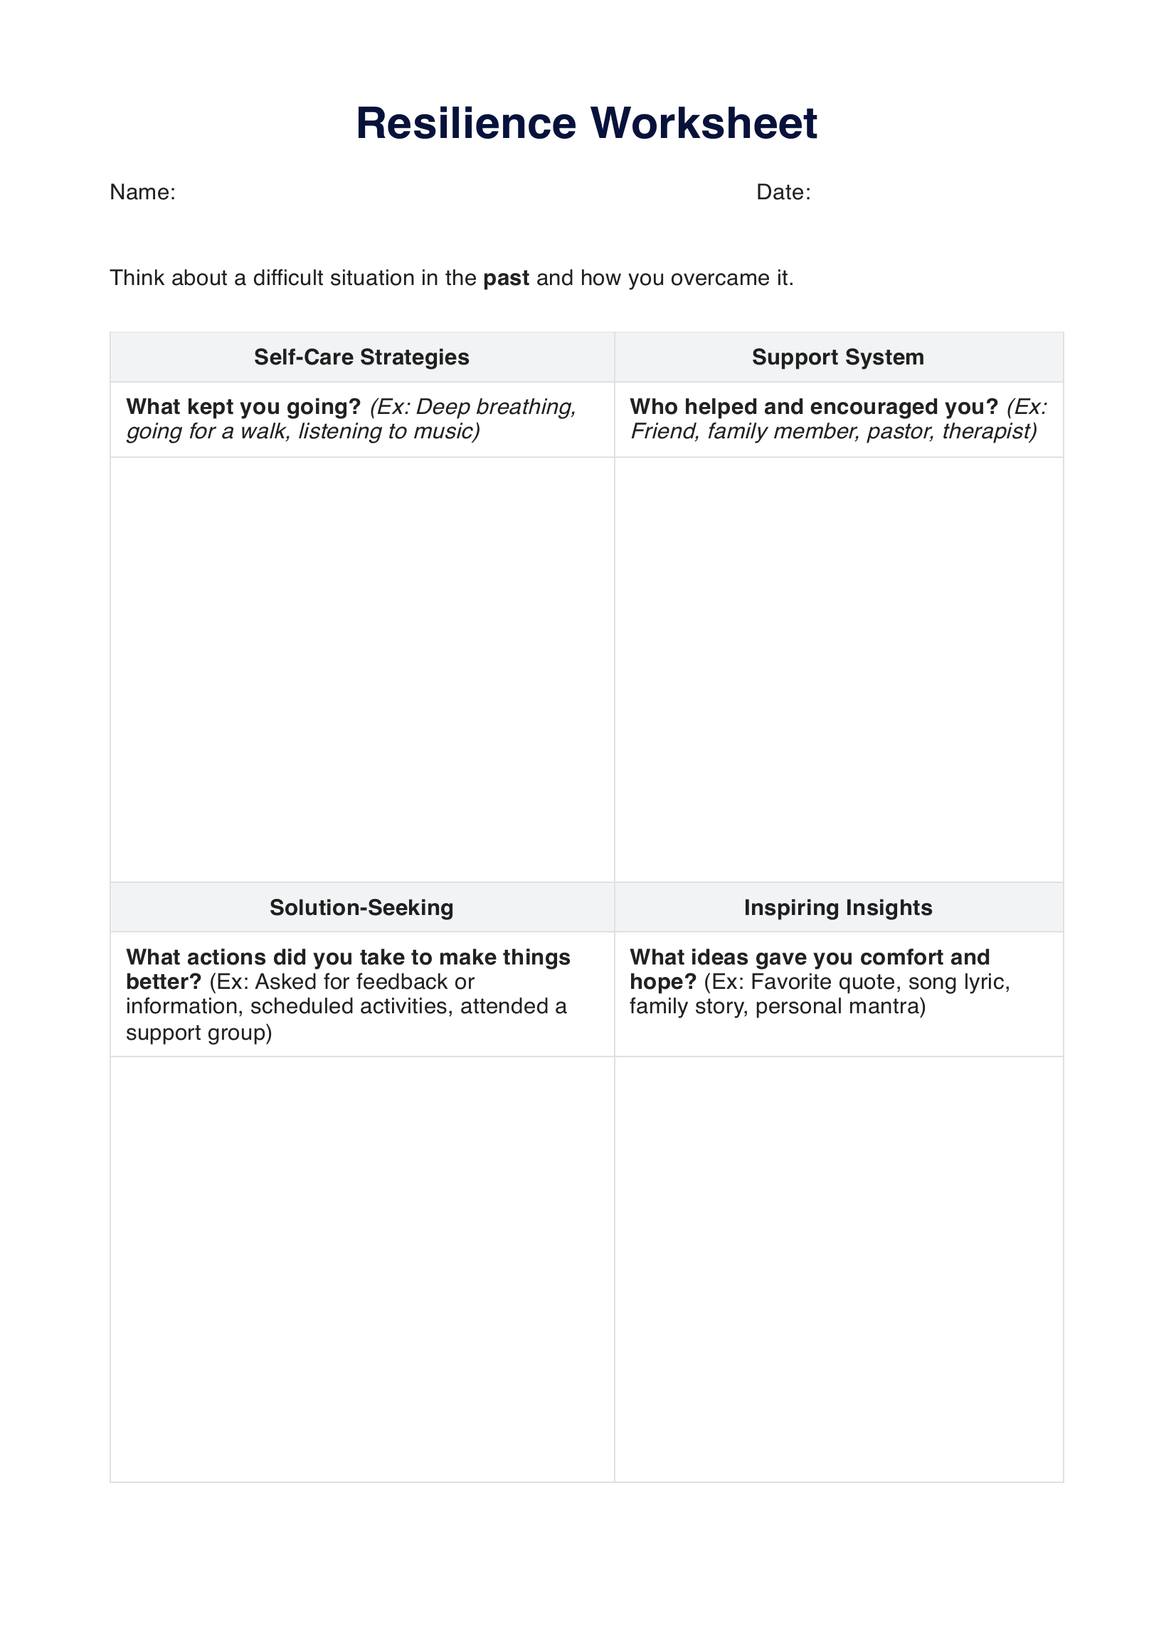 Resilience Worksheet PDF Example